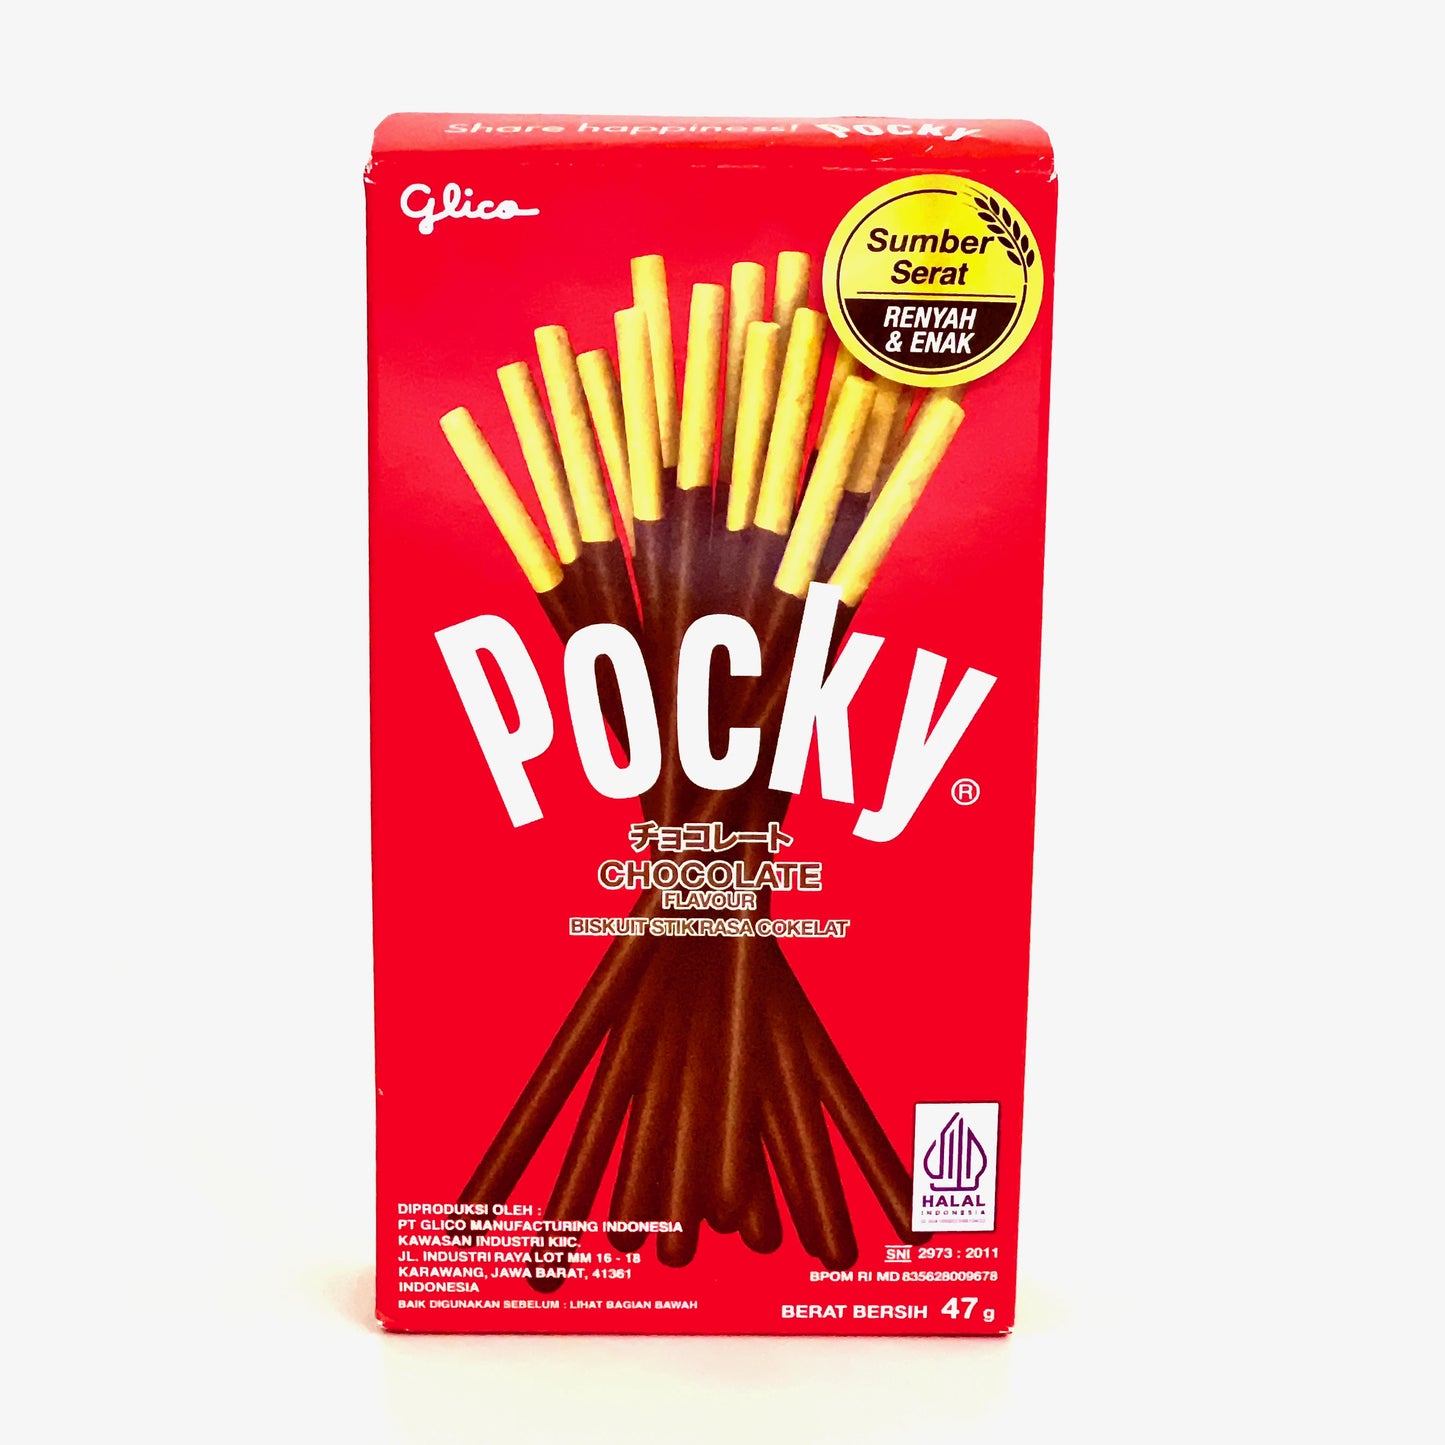 Knackige Kekssticks mit Schokoglasur der Marke Pocky